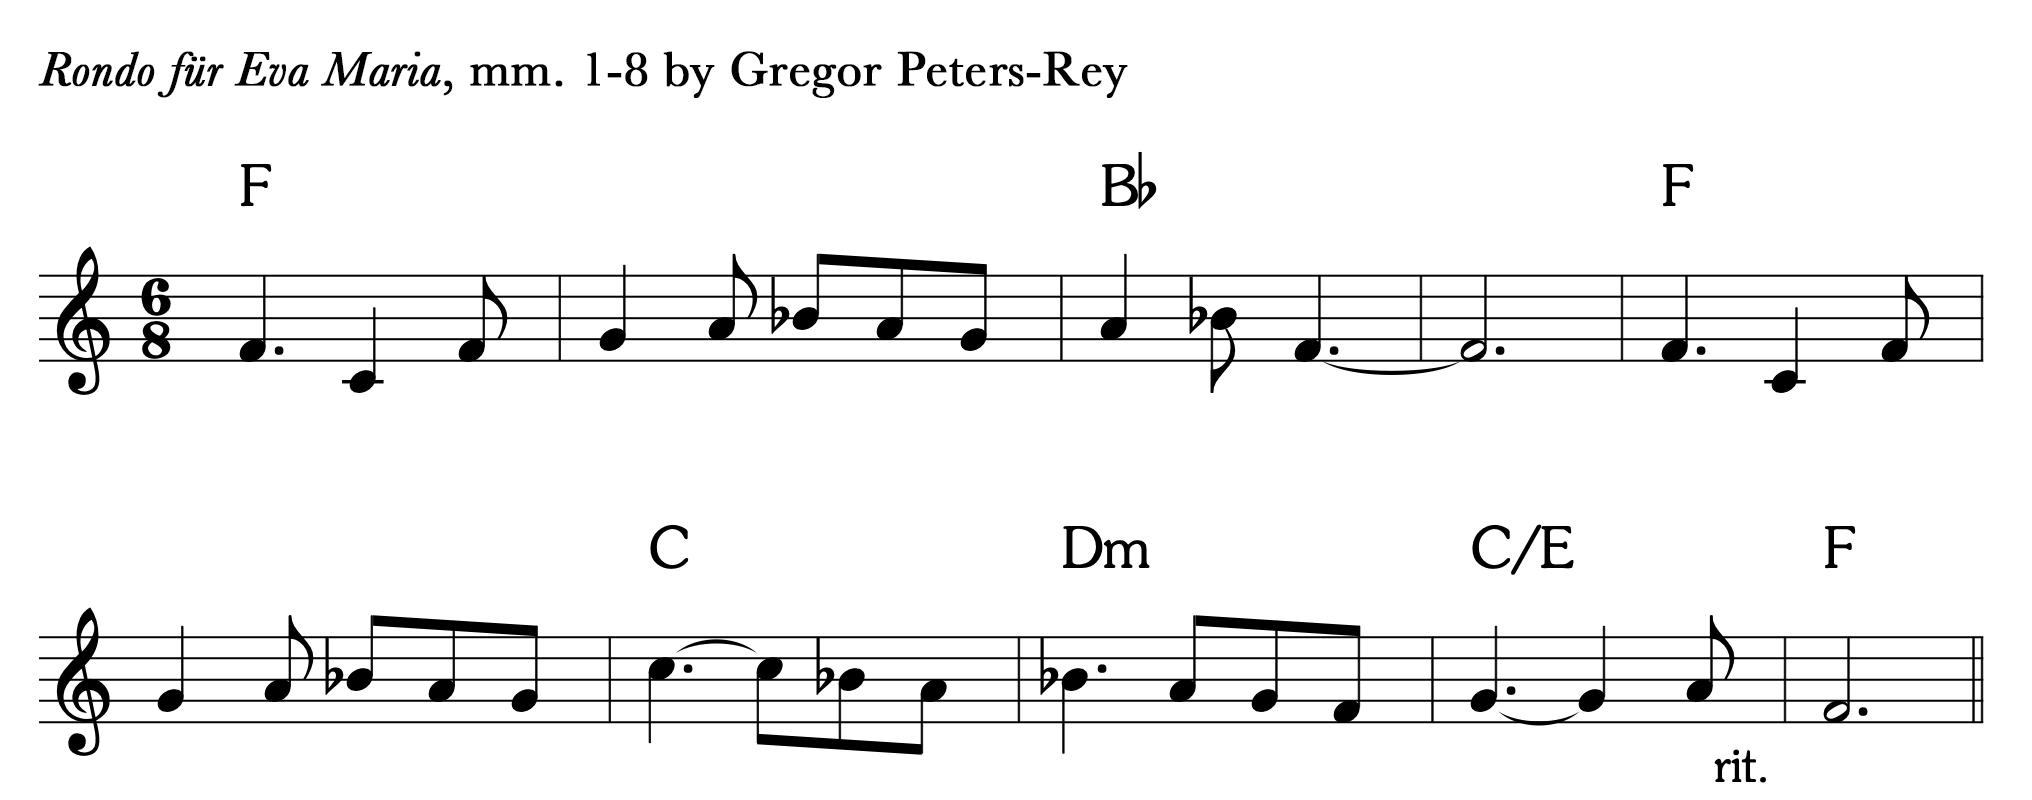 Excerpt from Rondo fur Eva Maria, measures 1 to 8 by Gregor Peters-Rey.